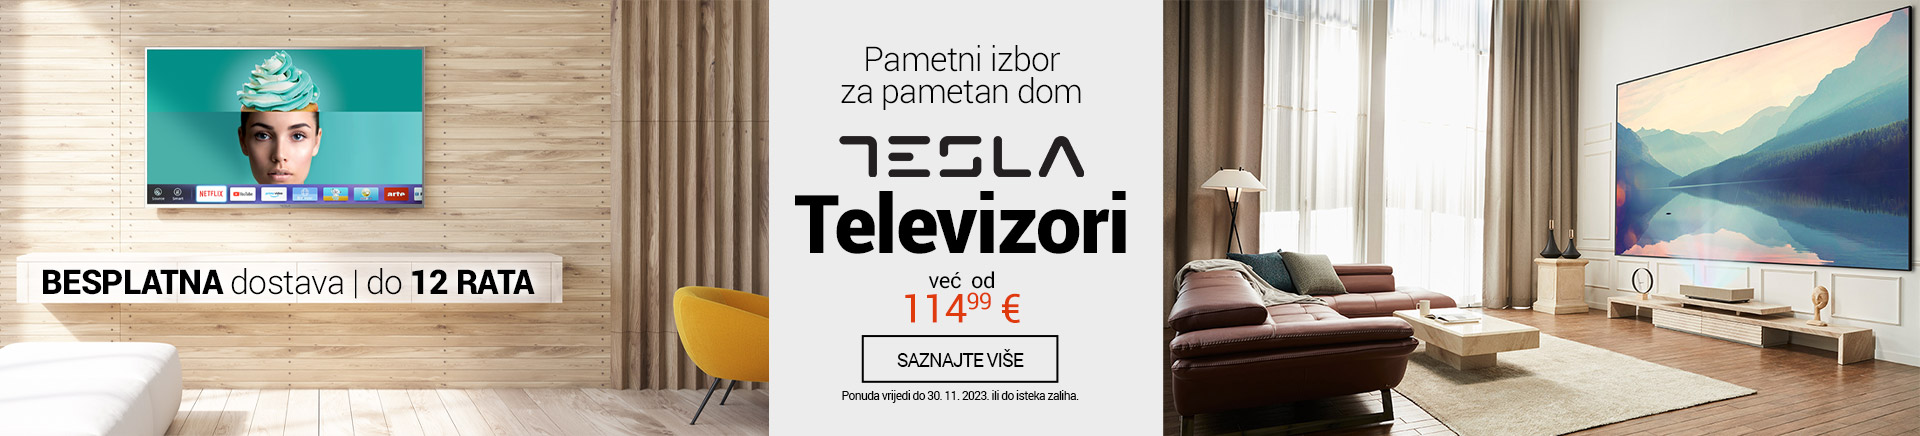 ME Pametni izbor Tesla Televizori TV vec od DESKTOP 1200 X 436.jpg